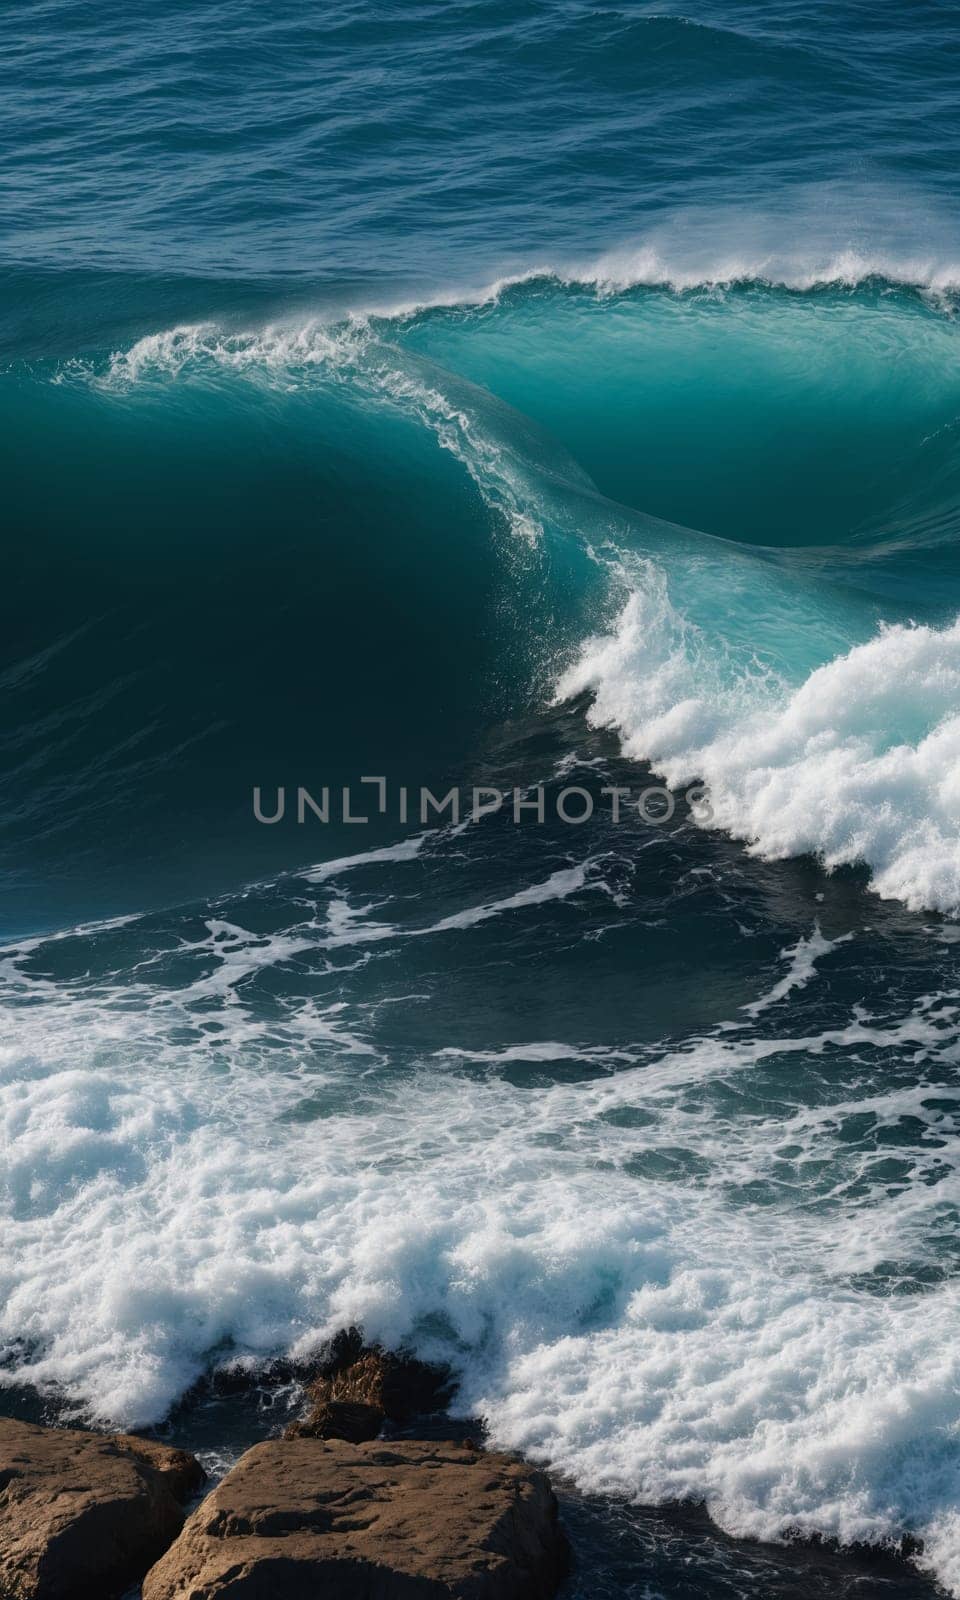 Waves breaking on the shore of the Atlantic Ocean in Portugal